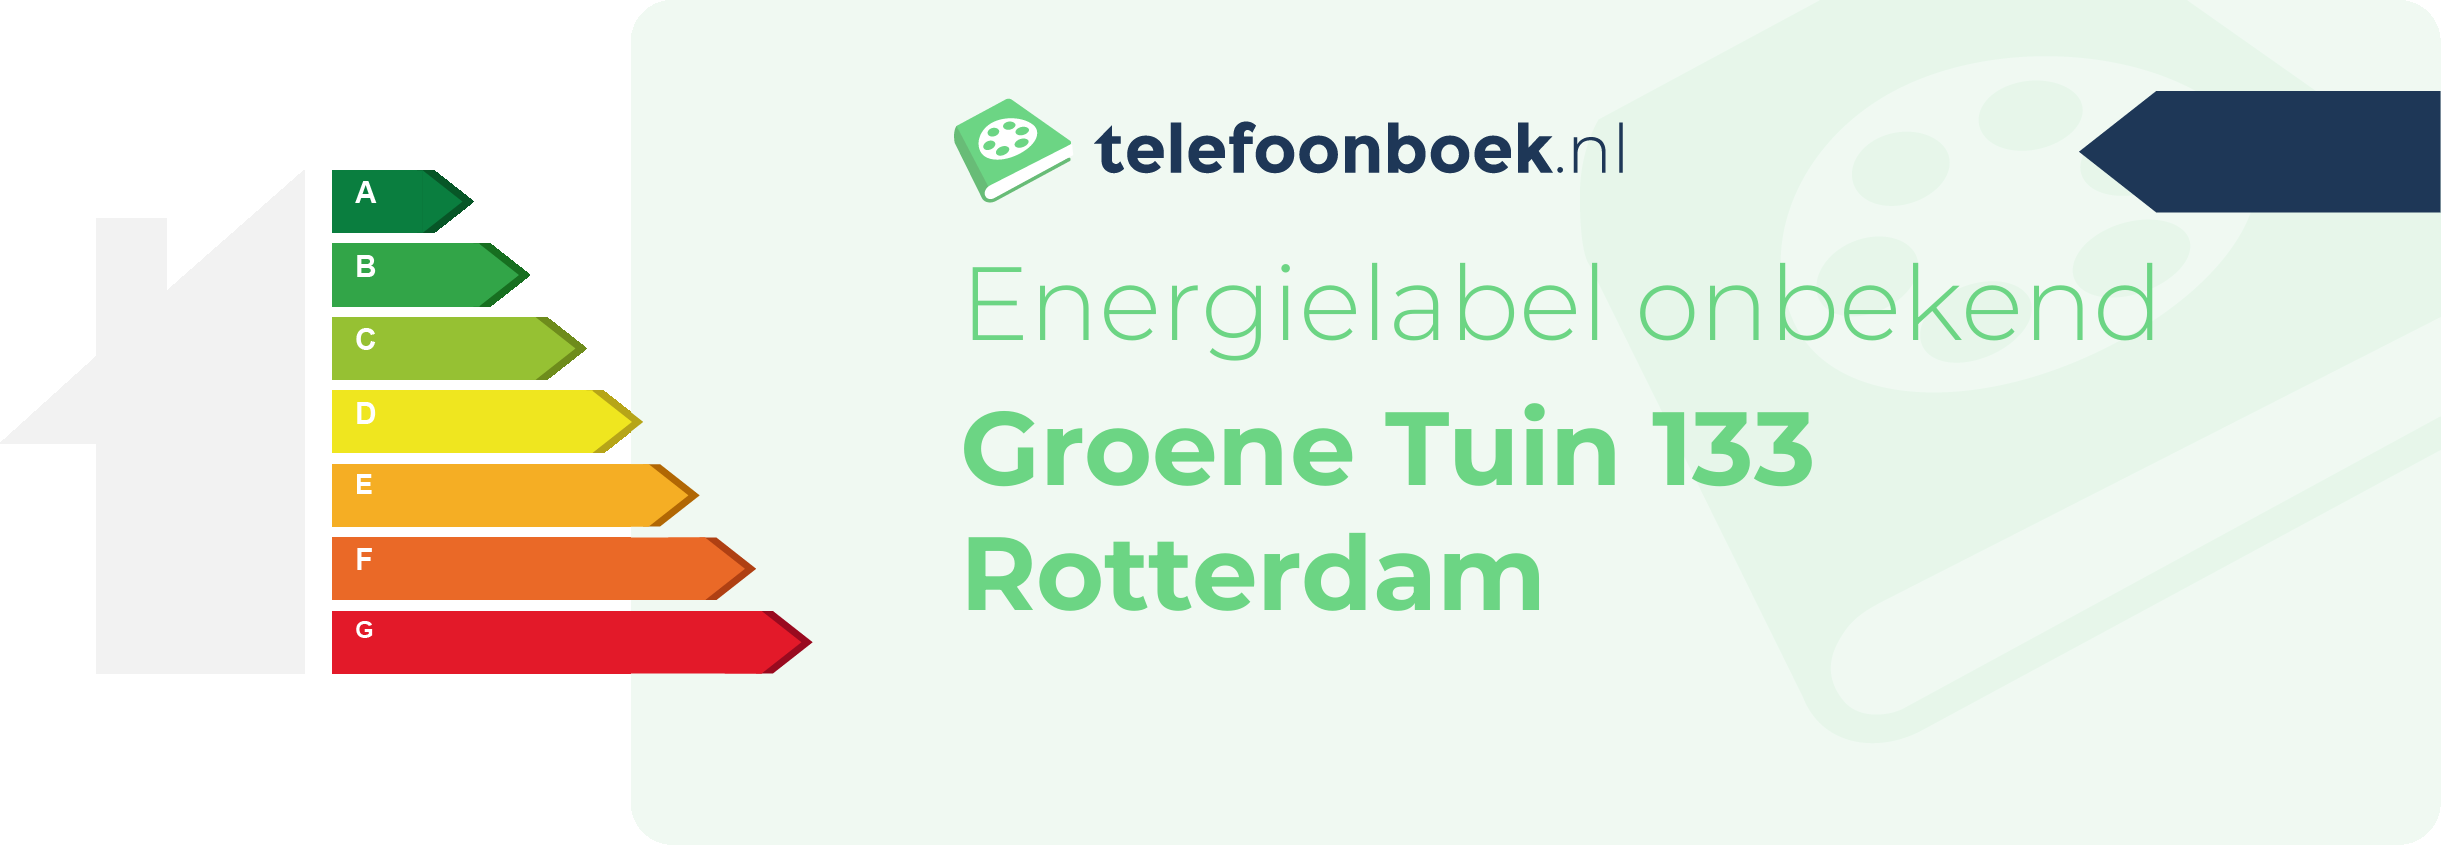 Energielabel Groene Tuin 133 Rotterdam